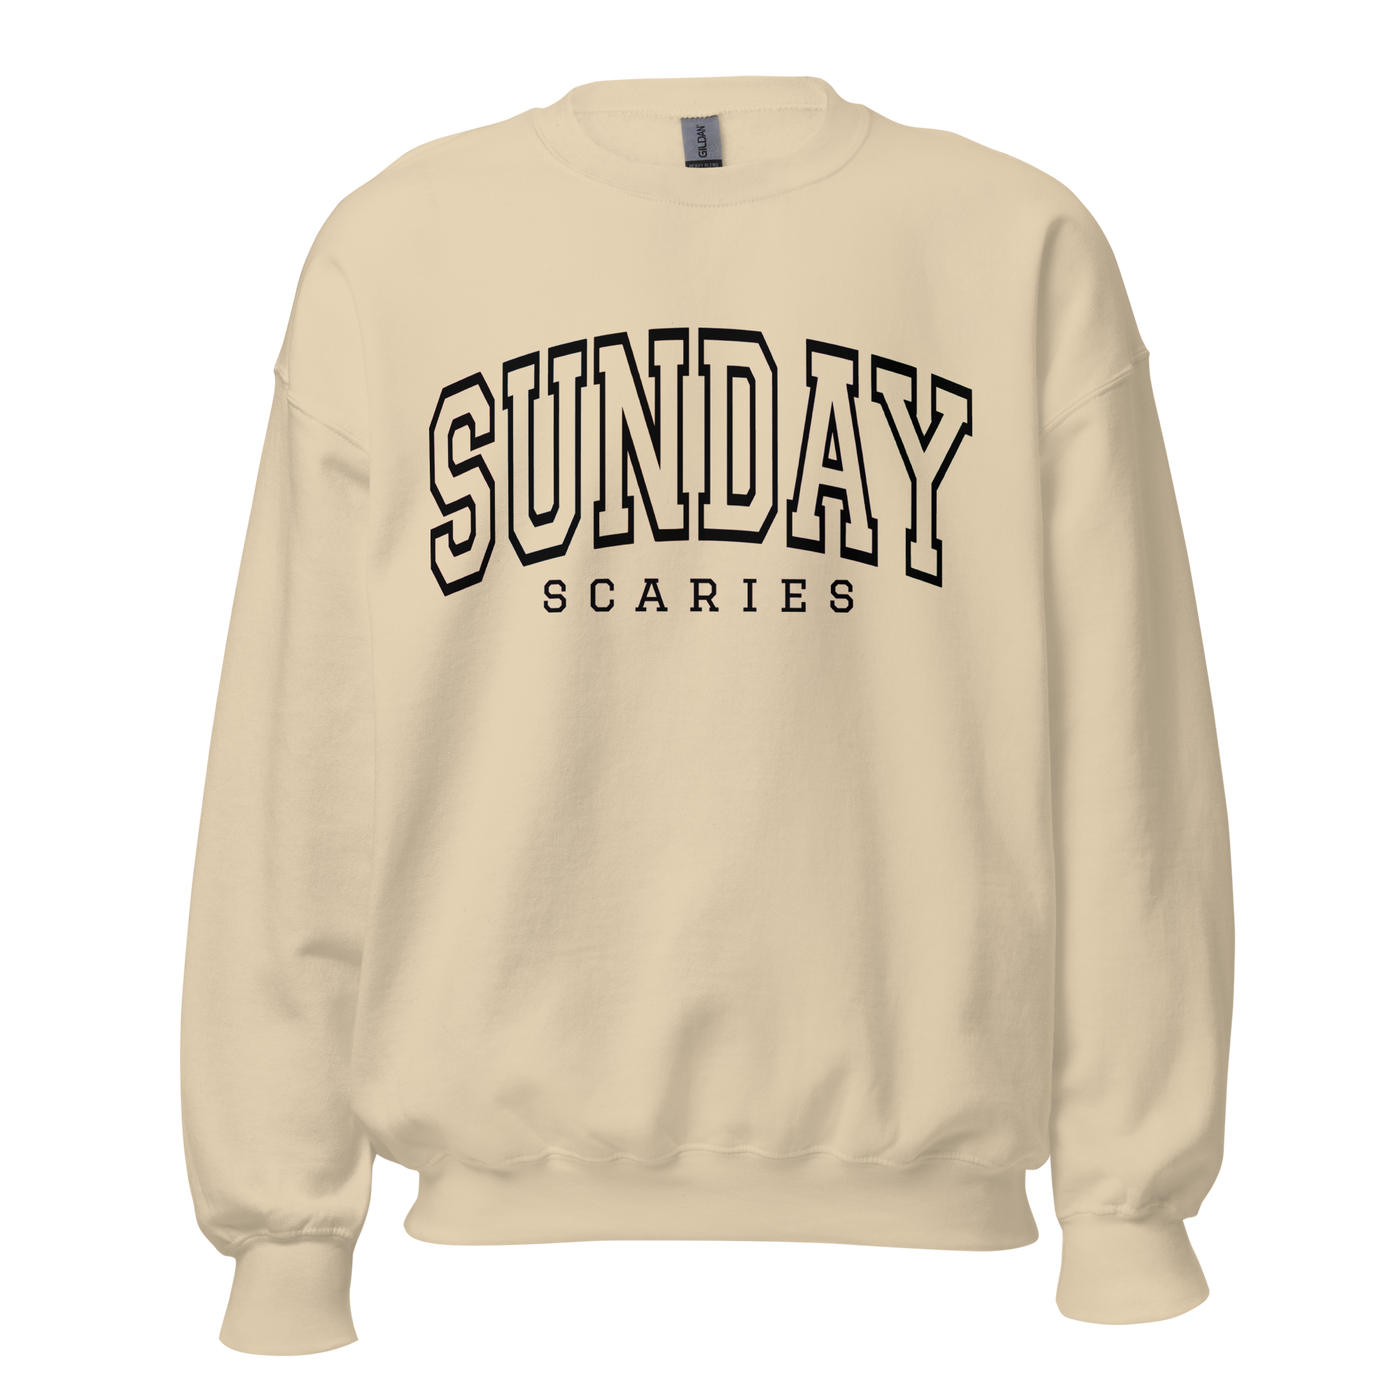 'Sunday Scaries' Crewneck Sweatshirt